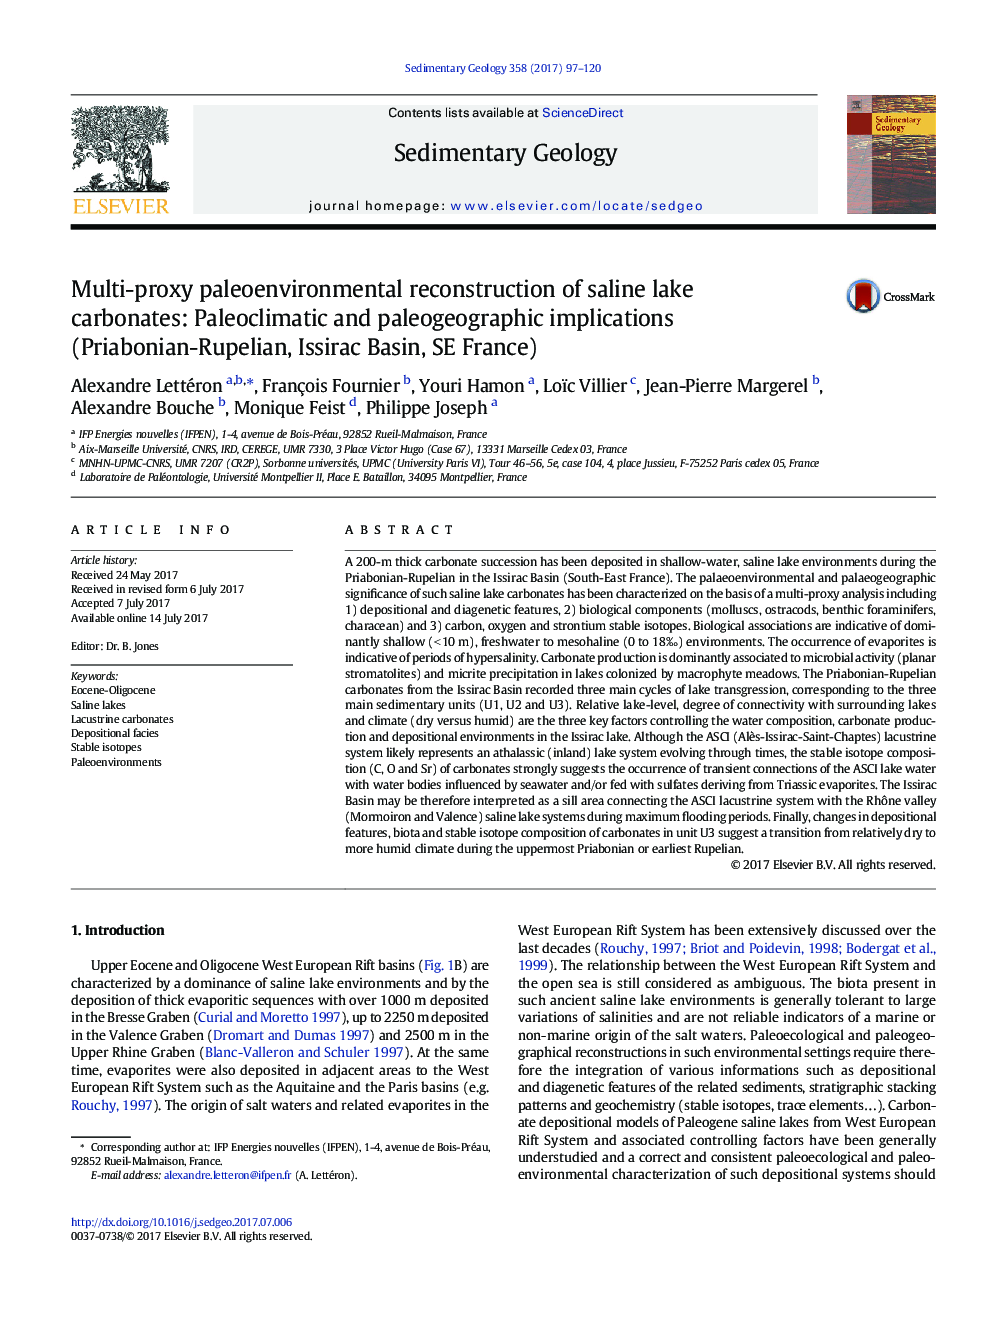 Multi-proxy paleoenvironmental reconstruction of saline lake carbonates: Paleoclimatic and paleogeographic implications (Priabonian-Rupelian, Issirac Basin, SE France)